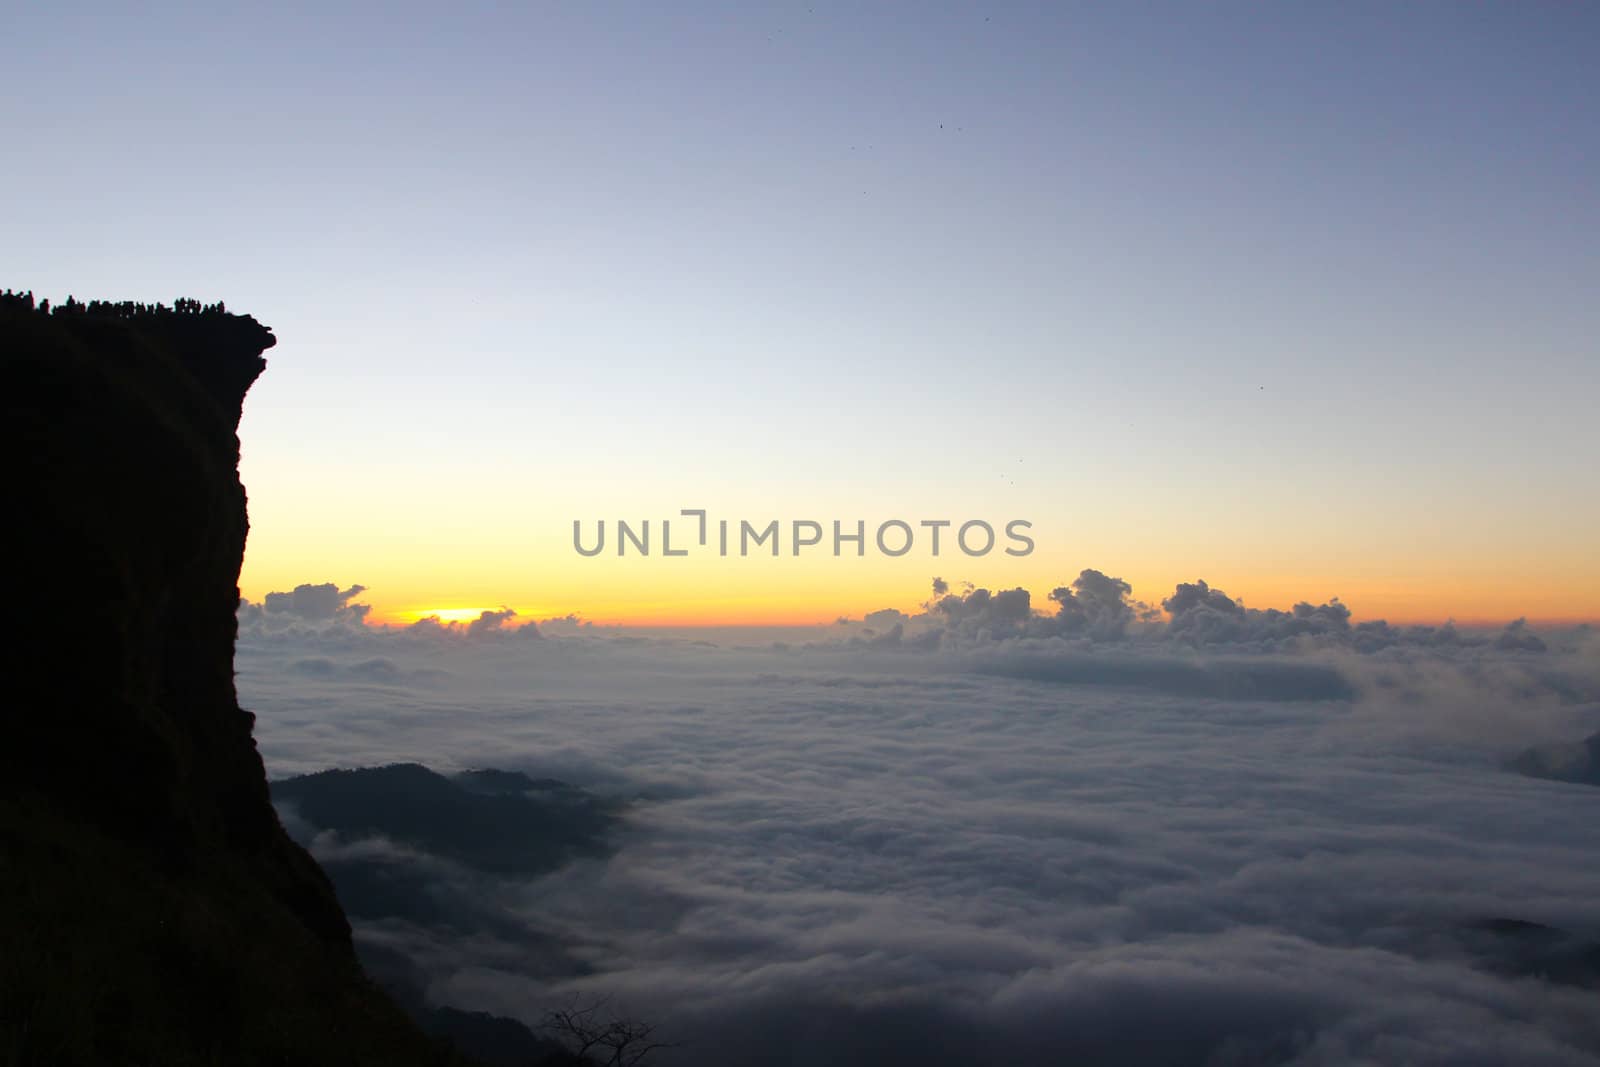 Sunrise scene with the peak and cloudscape at Phu chi fa in Chia by bajita111122